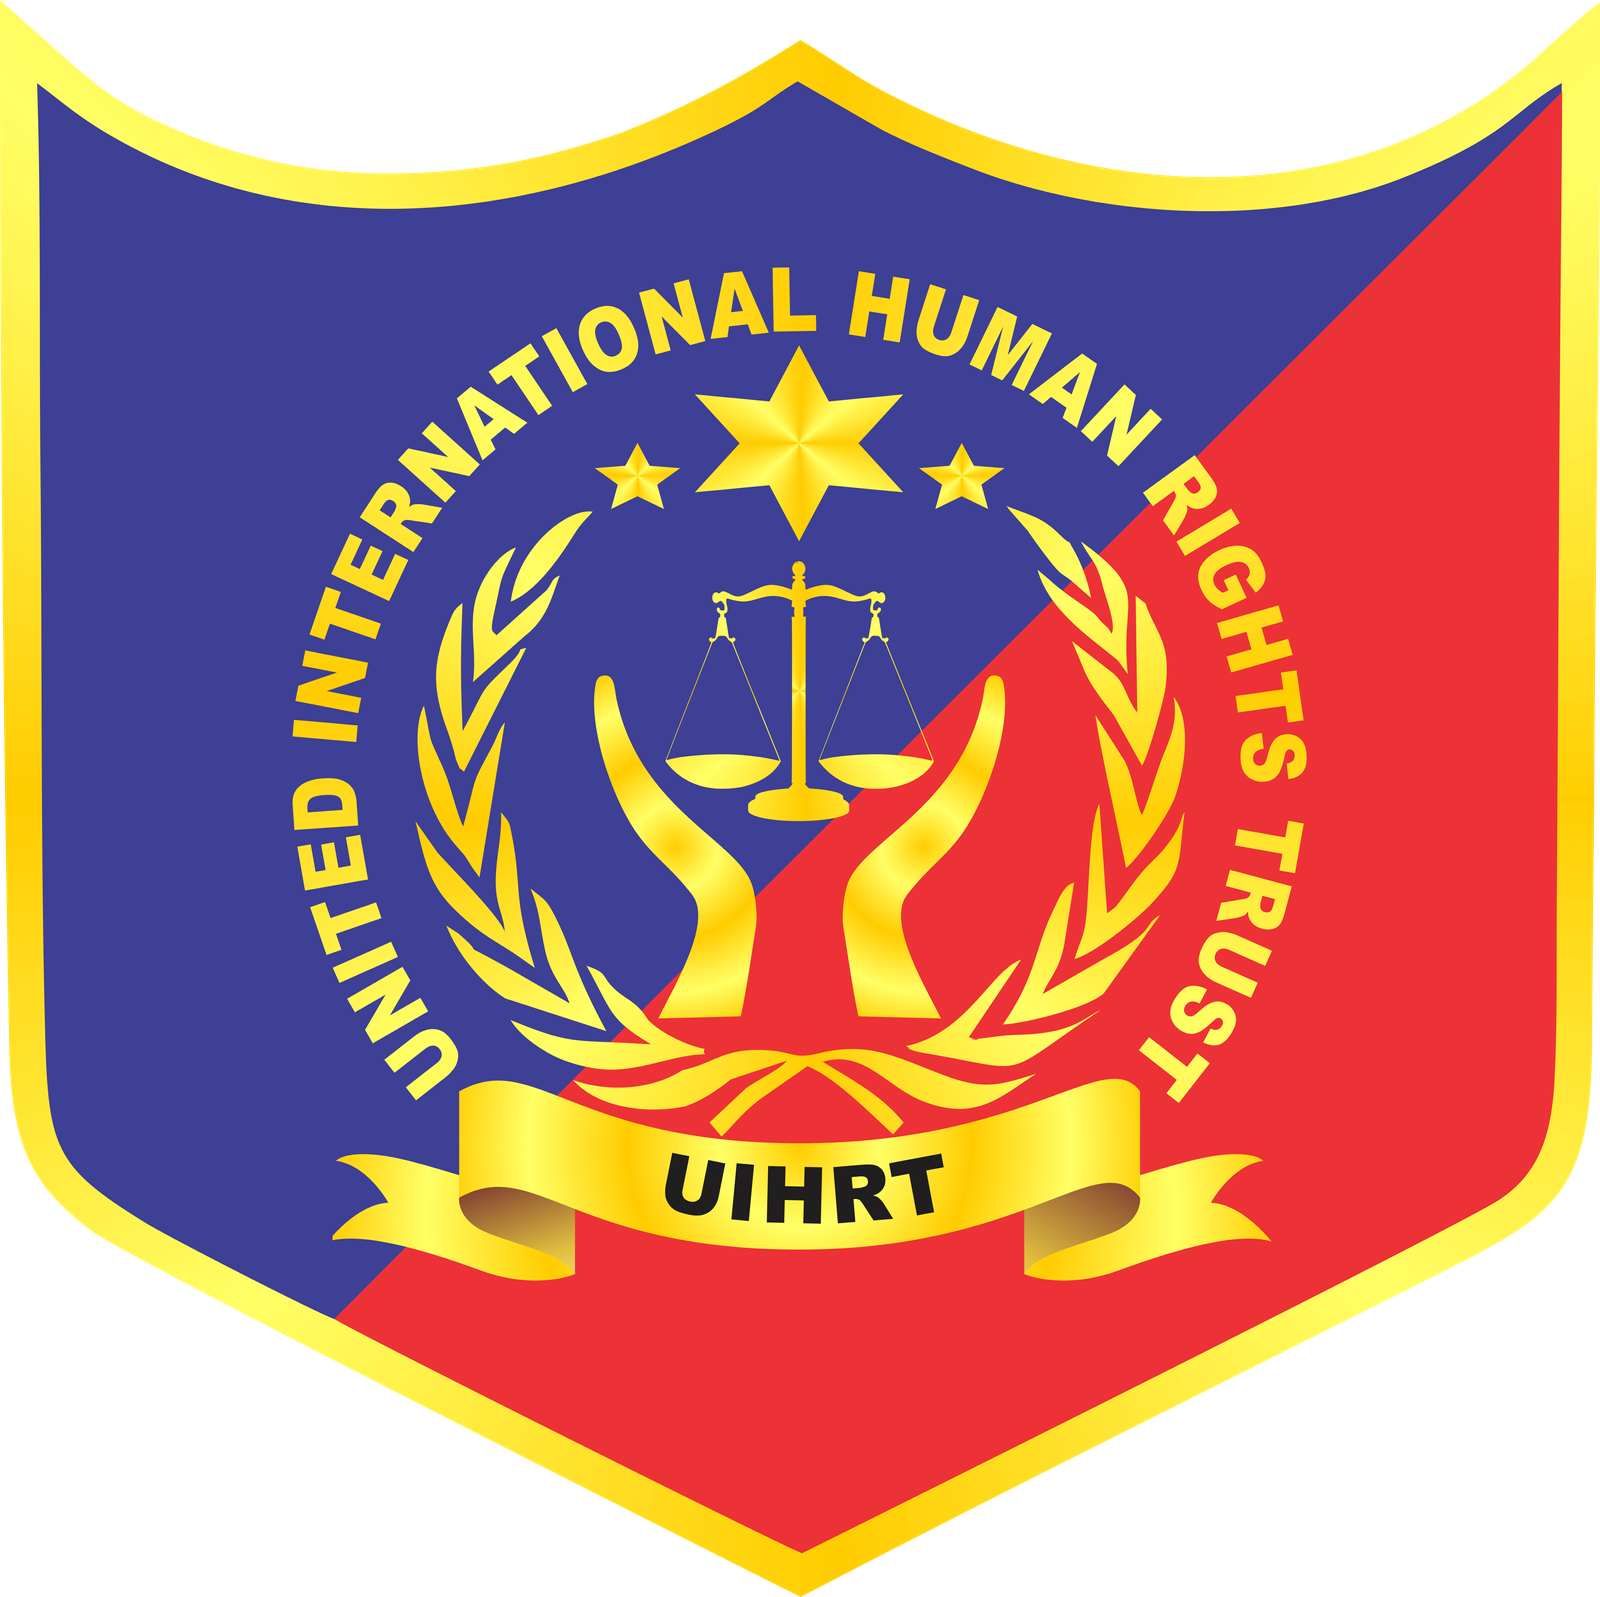 United International human rights organization